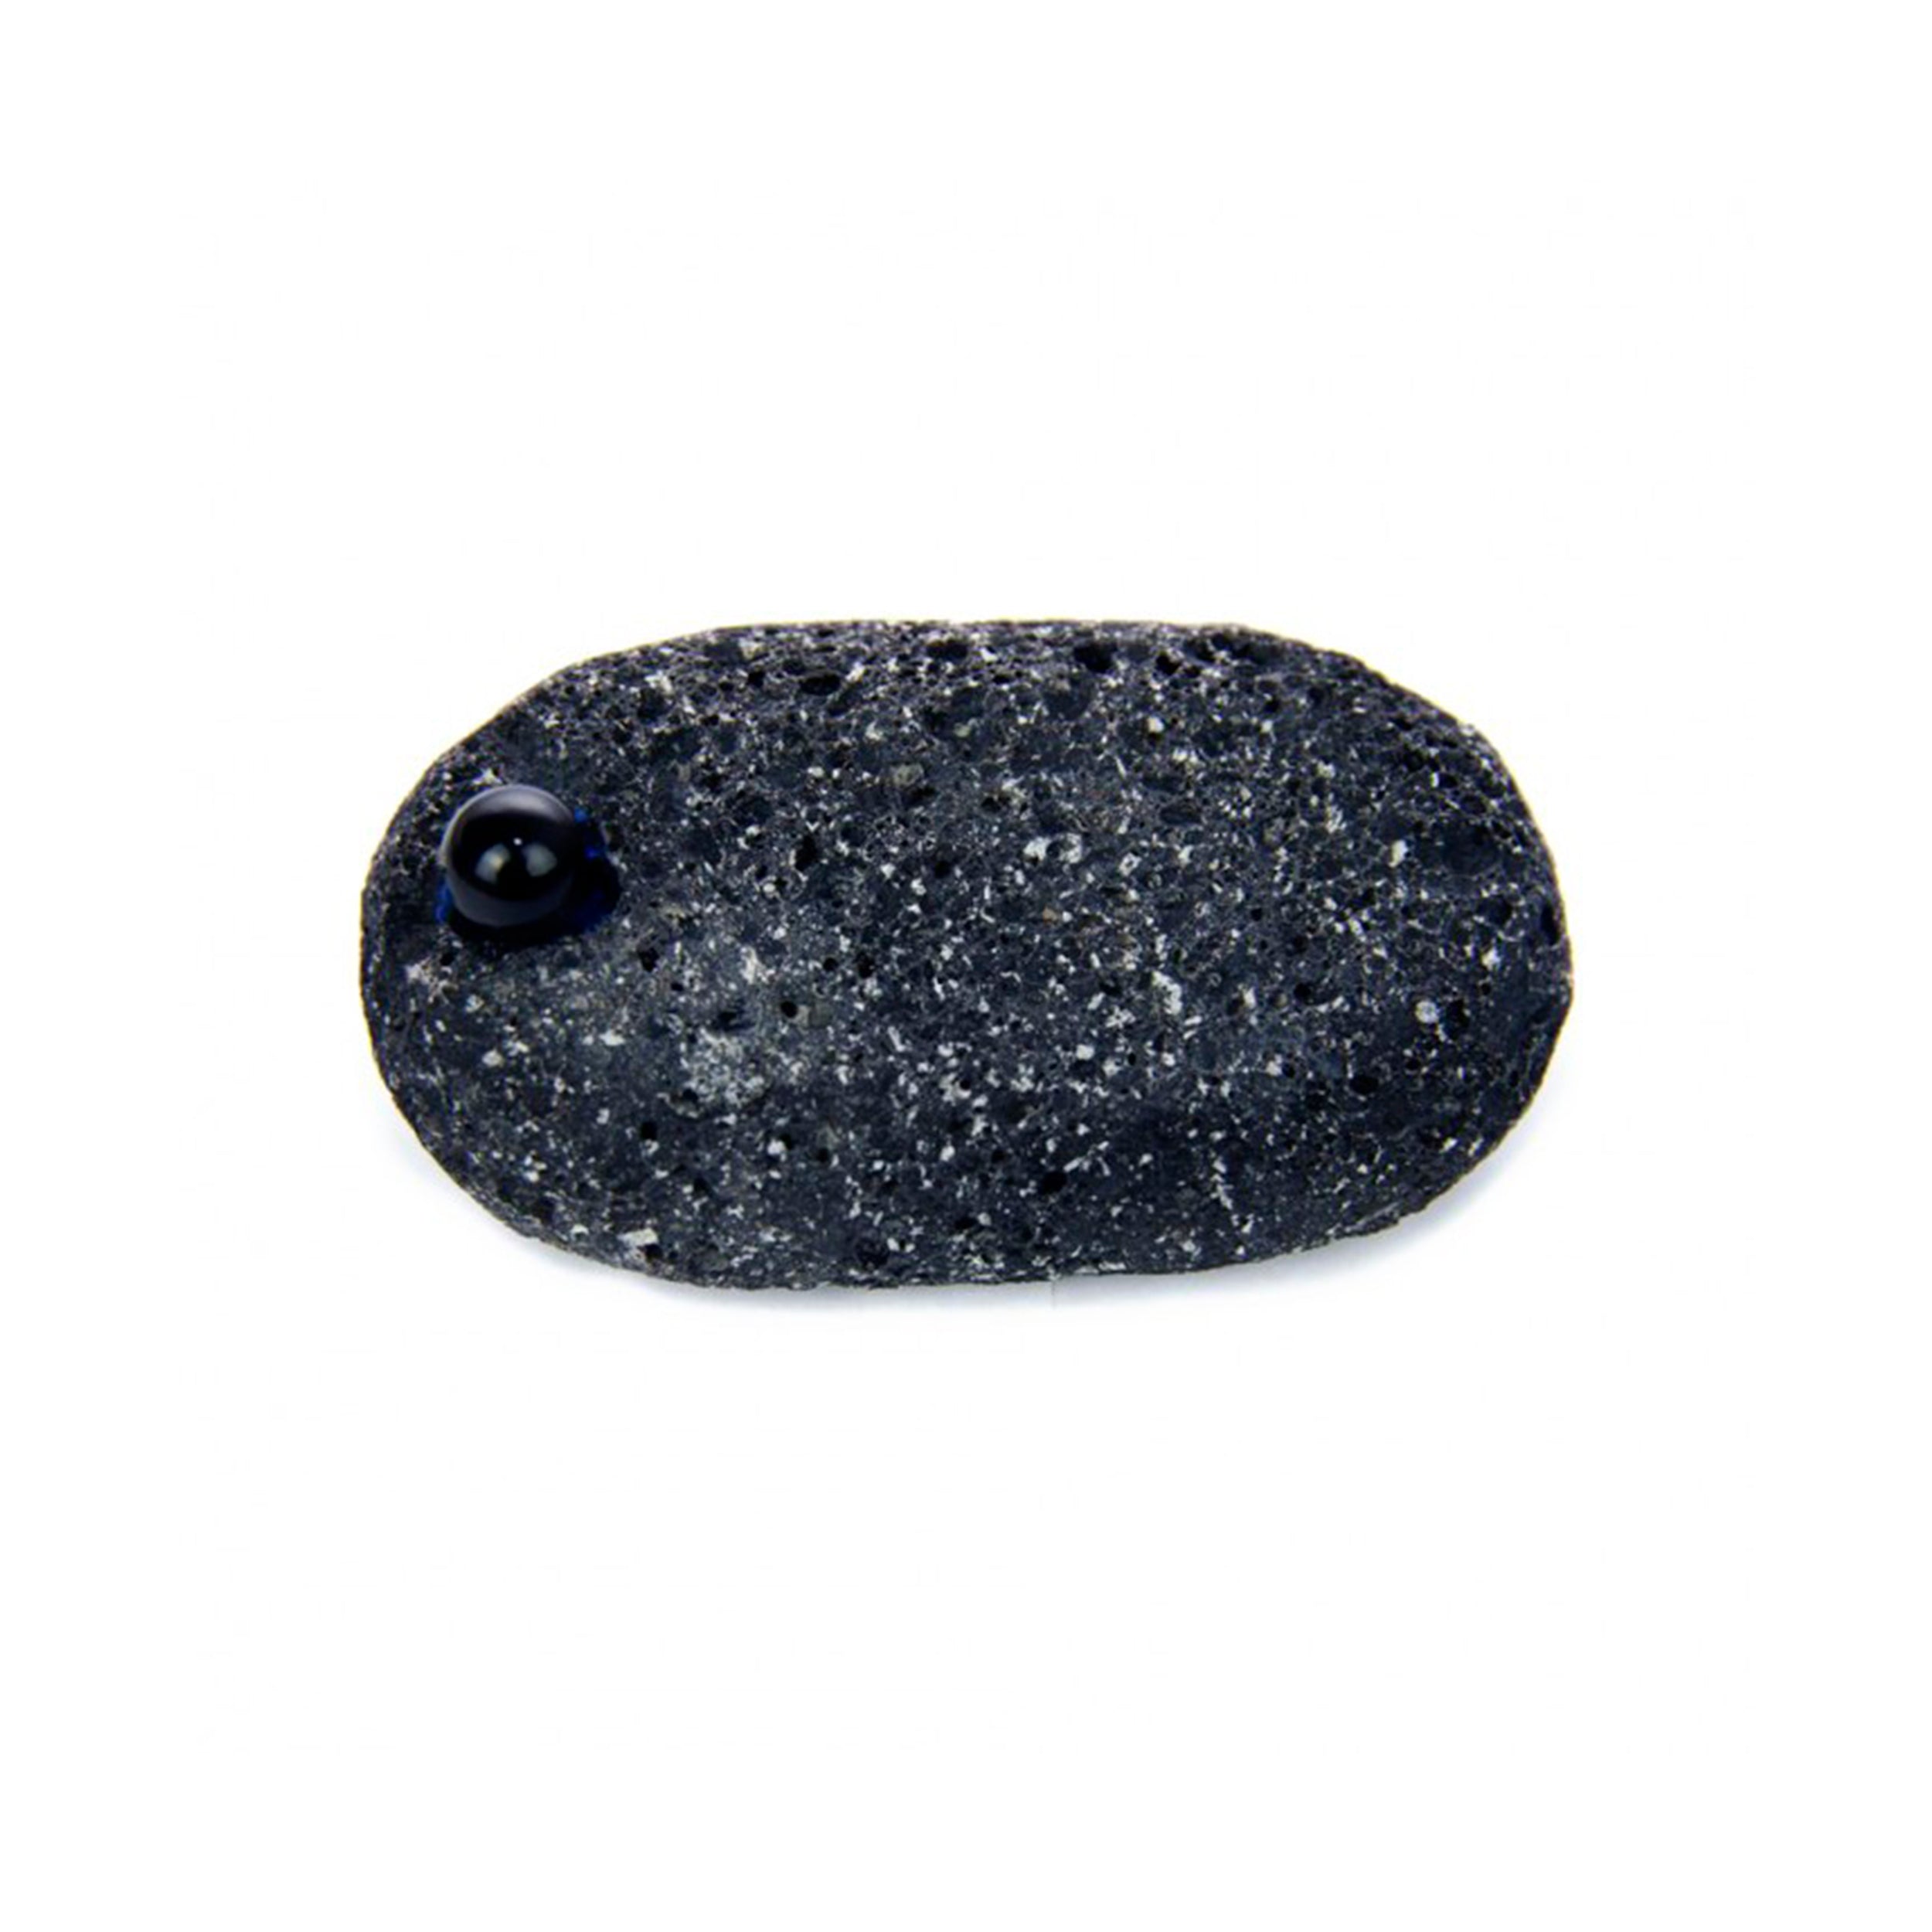 Perla negra- Piedra volcánica.